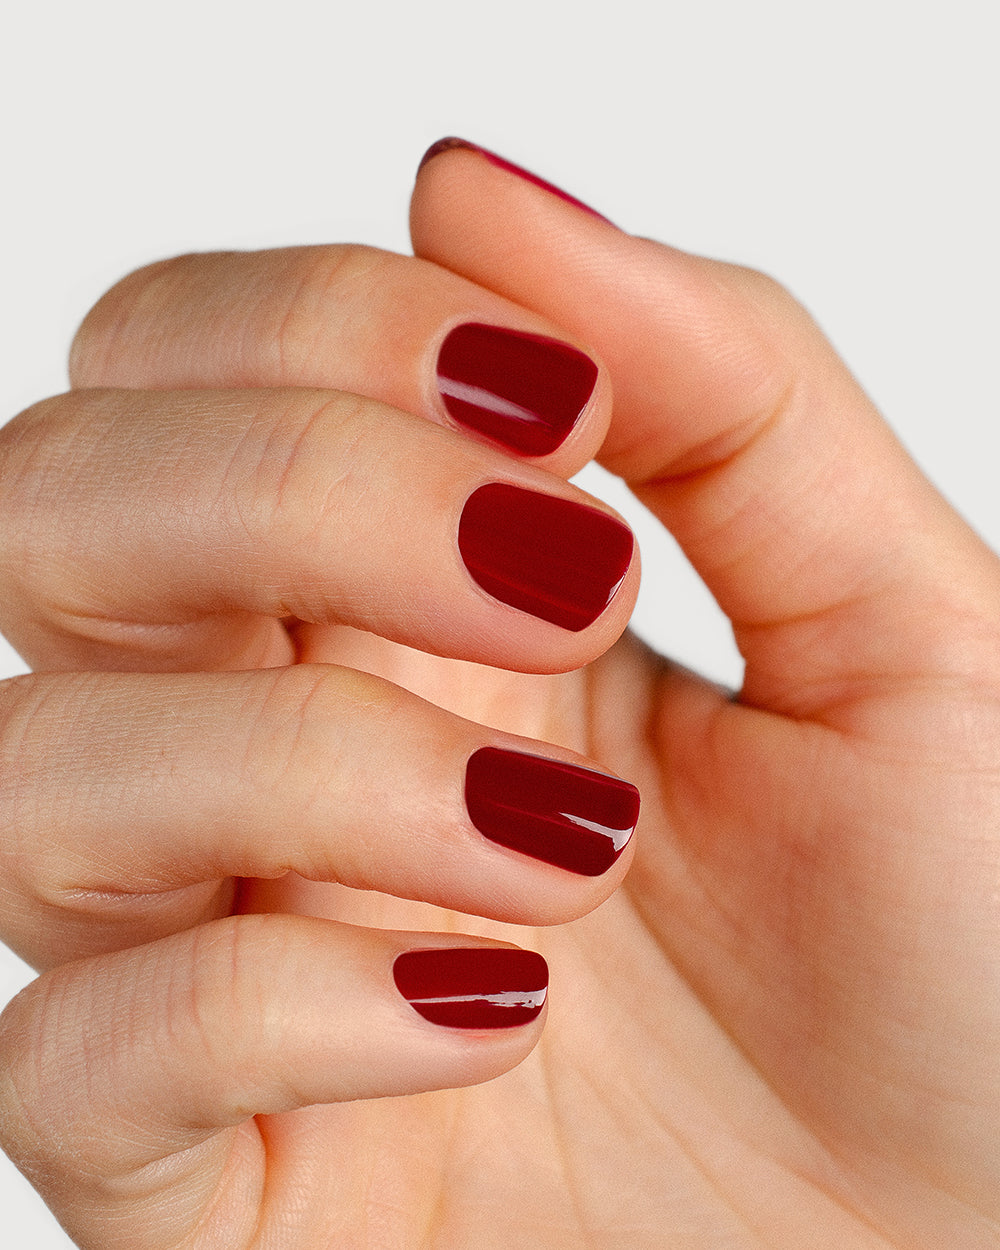 Plum red nail polish hand swatch on fair skin tone up-close